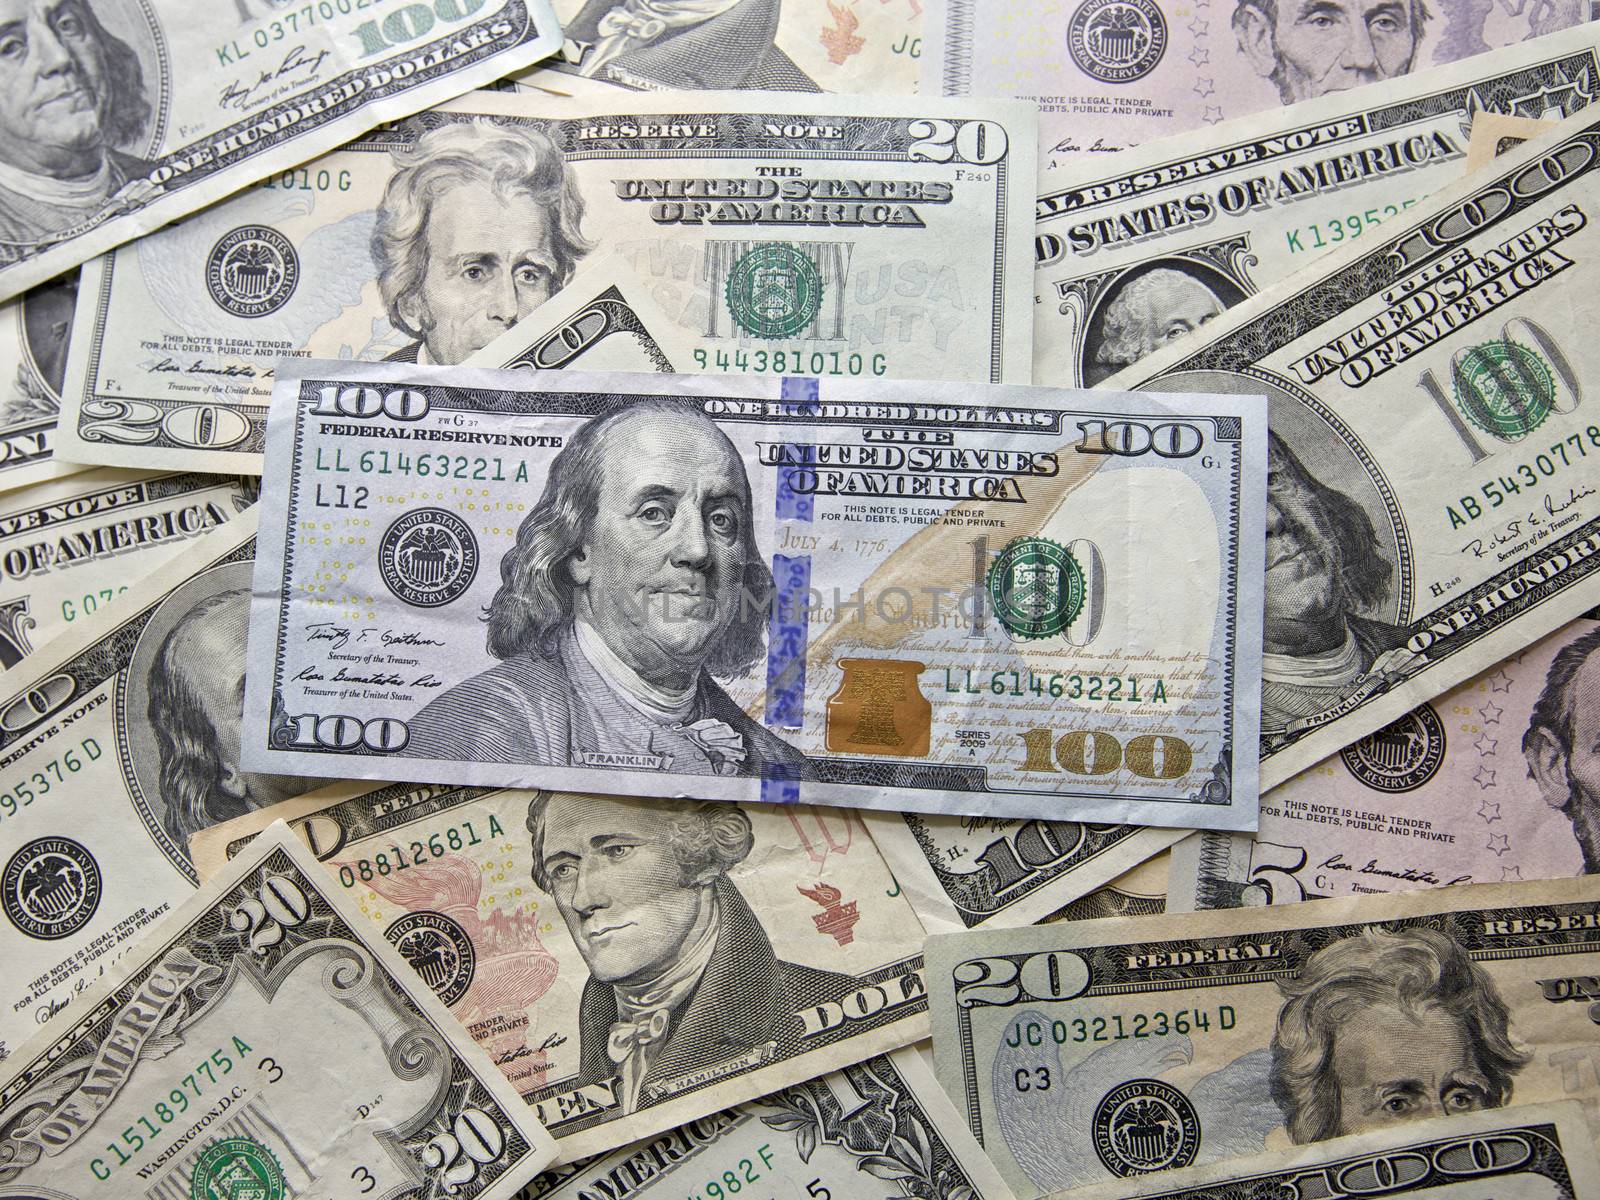 American Greenback Dollar Notes with various bank notes